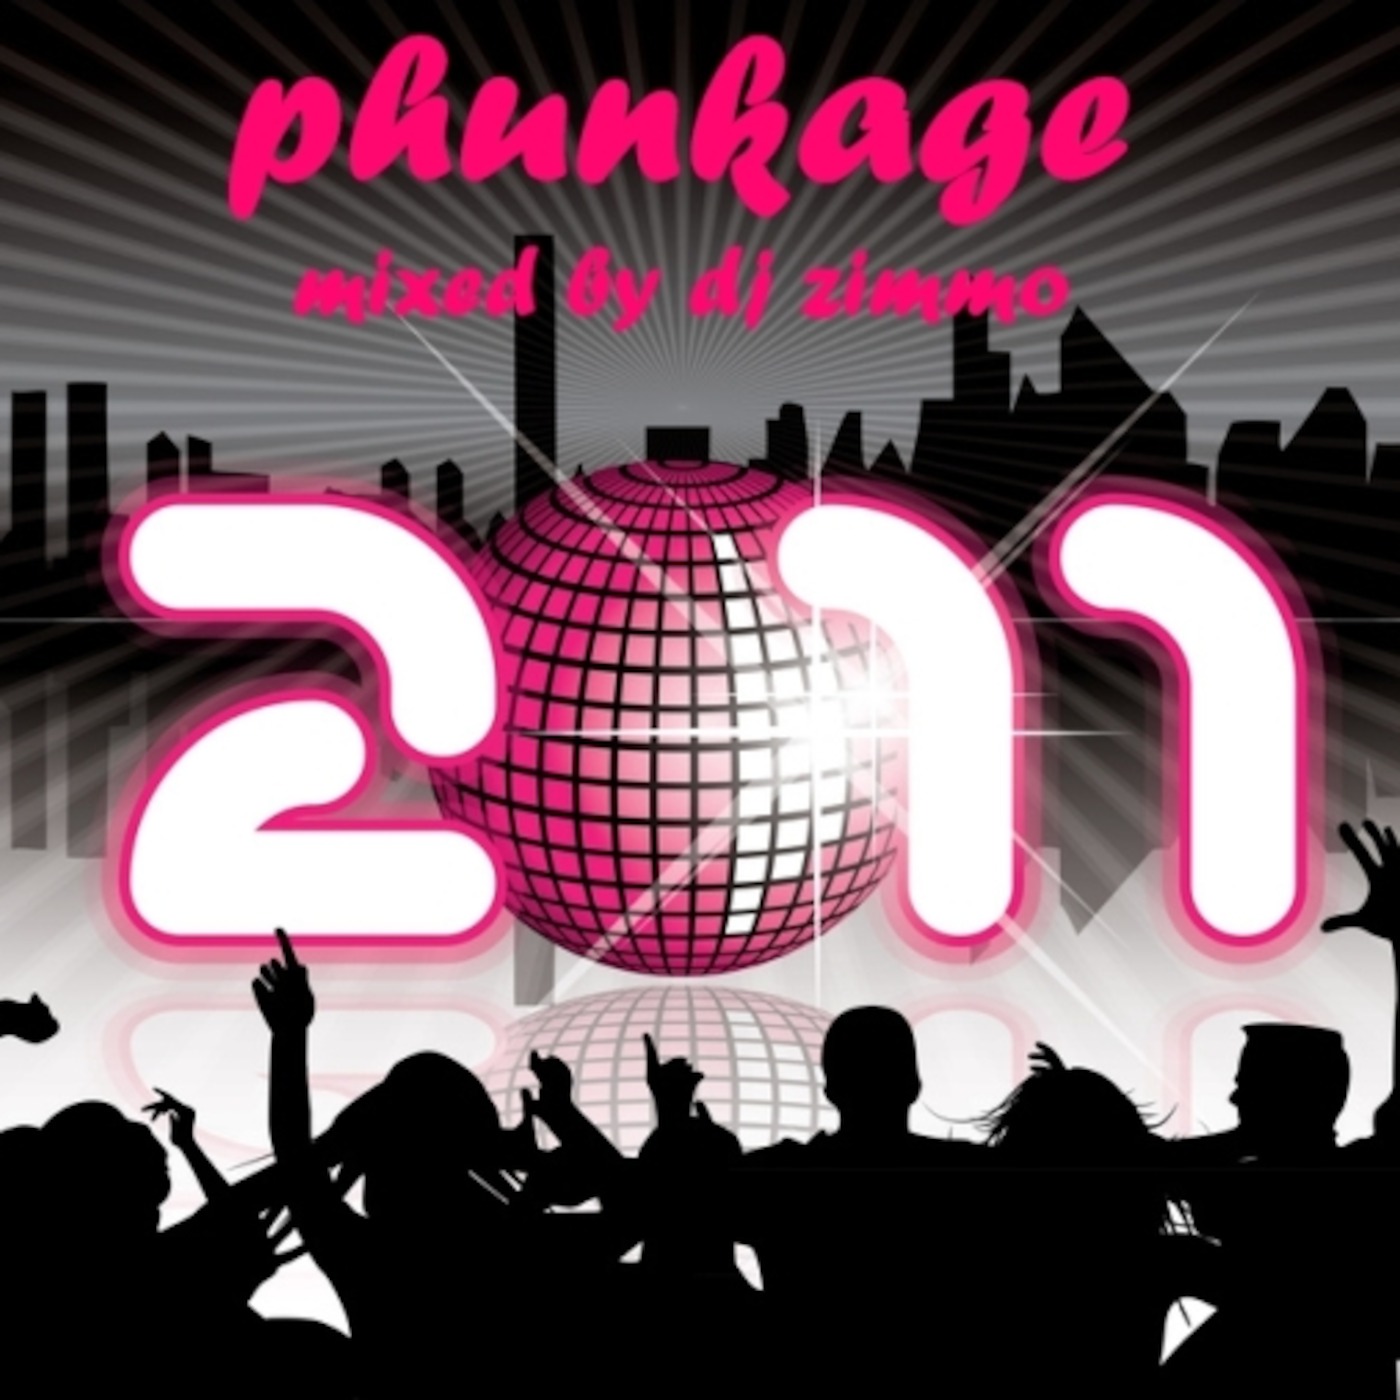 Phunkage - January 2011